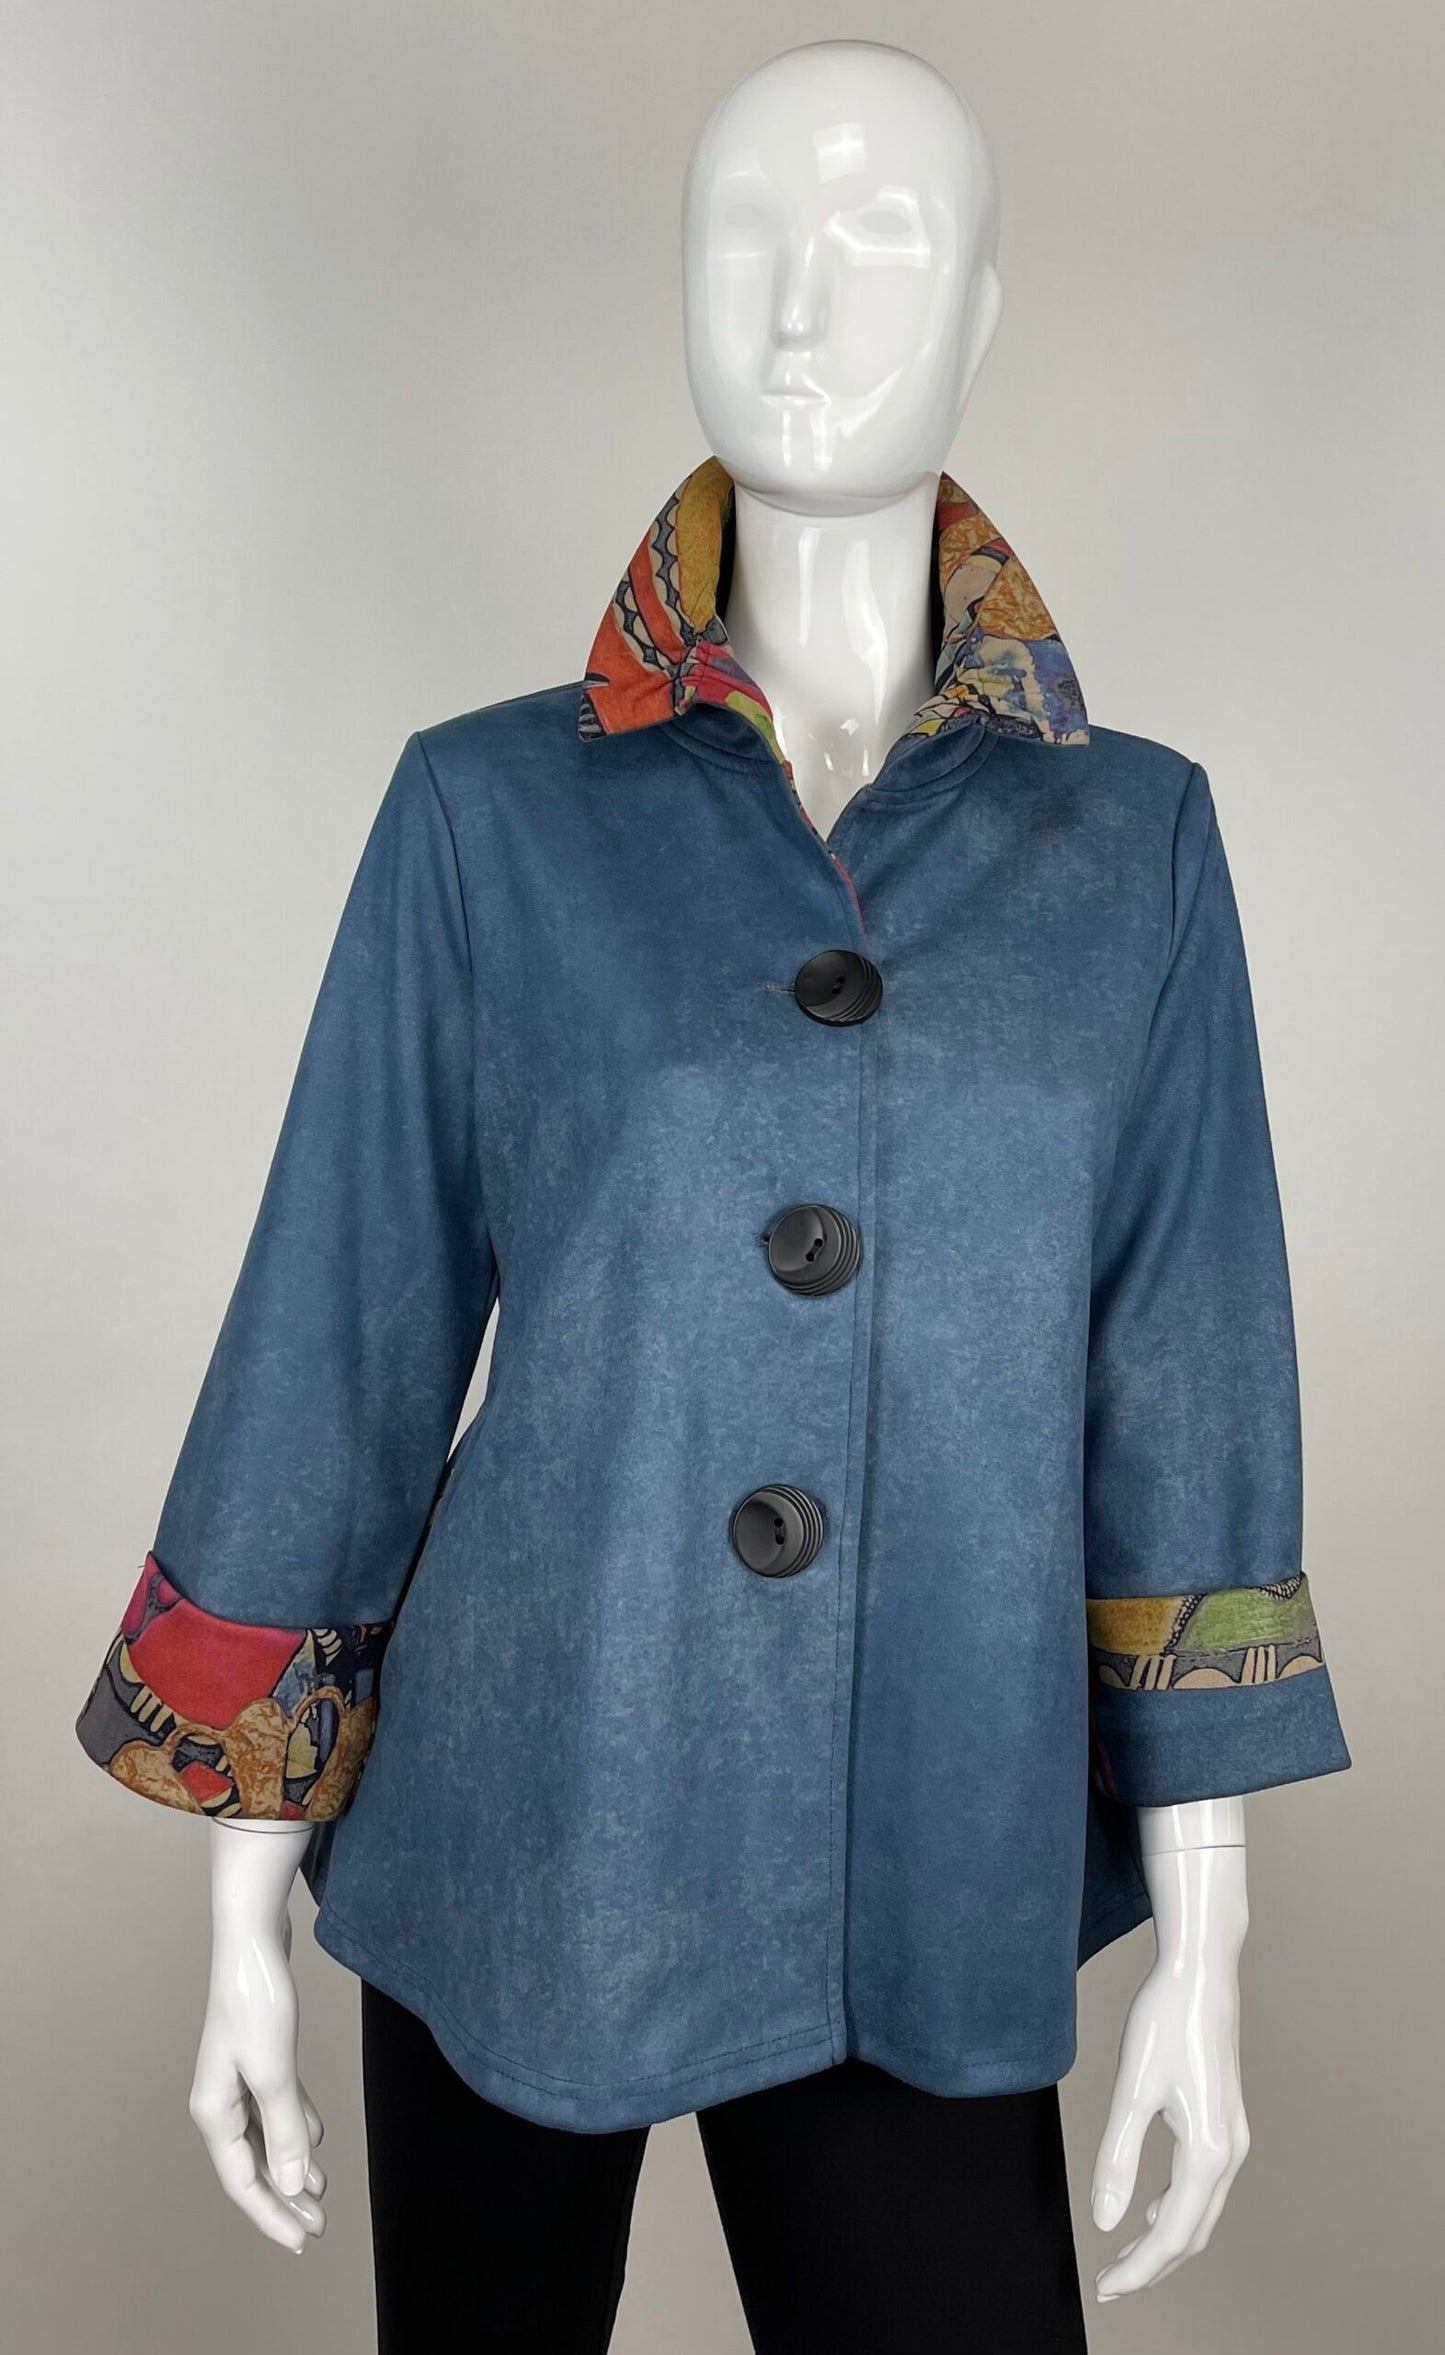 Blue Jacket With Patterned Details